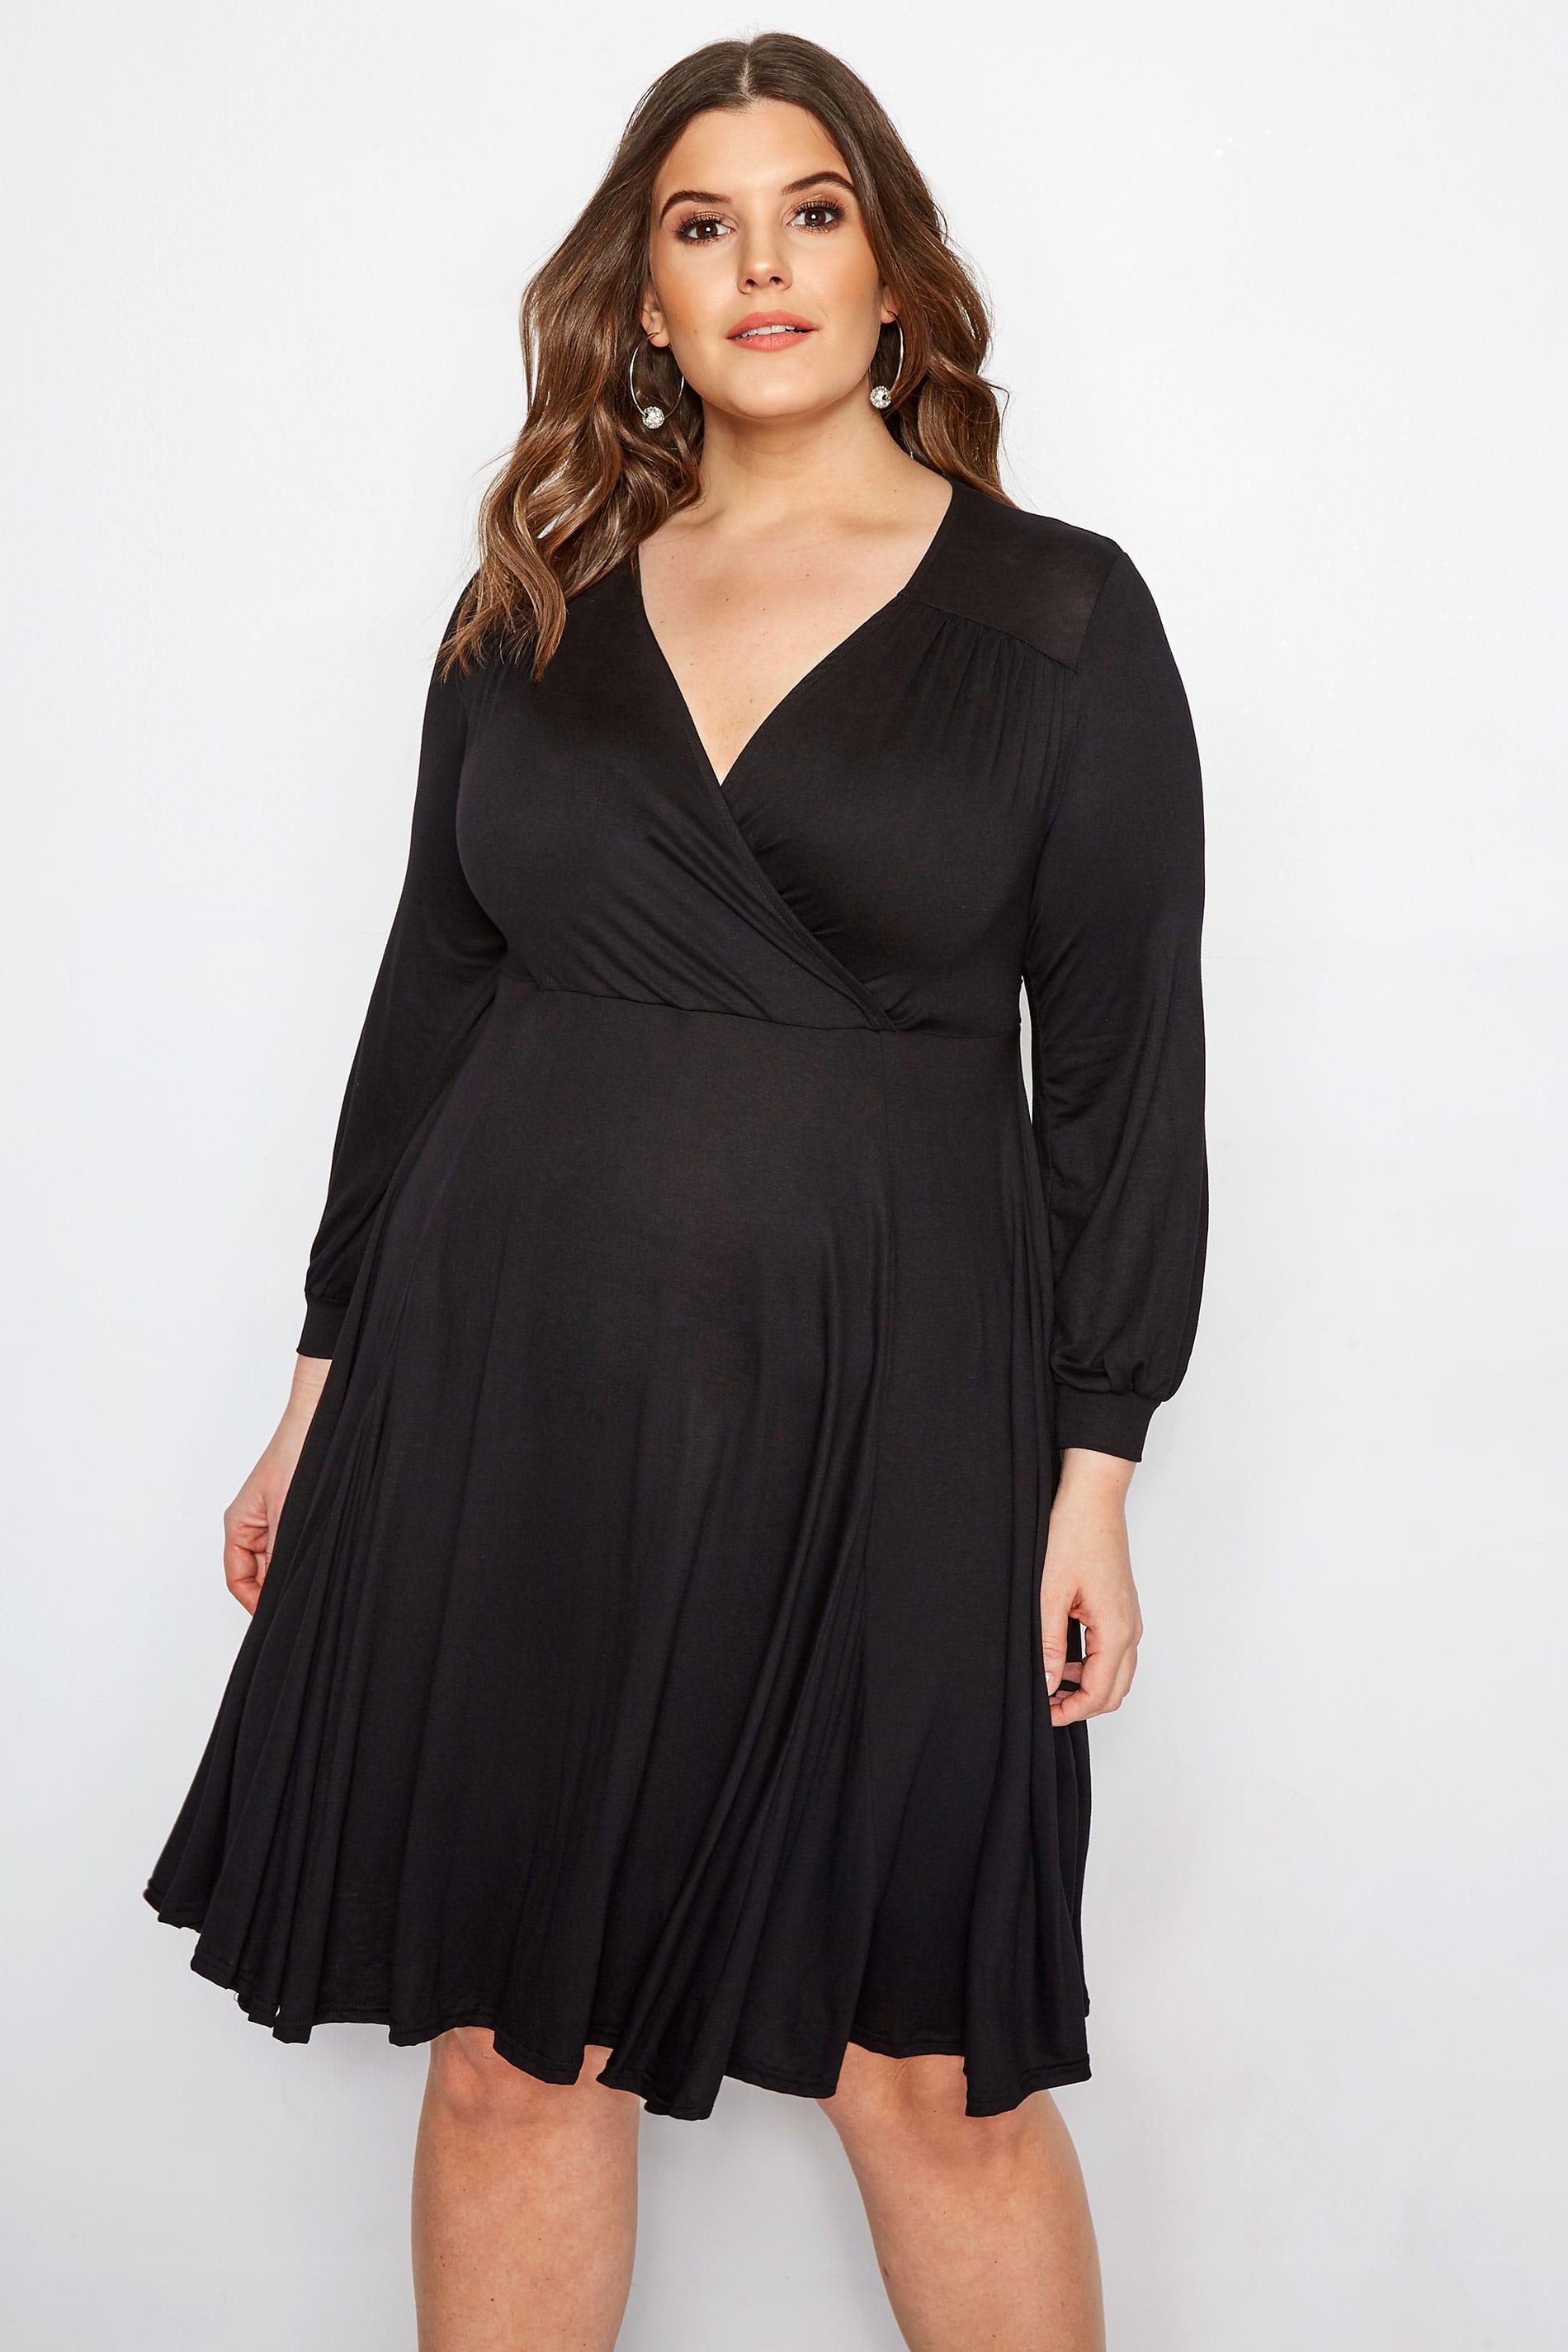 YOURS LONDON Black Godet Wrap Dress, Plus size 16 to 32 | Yours Clothing